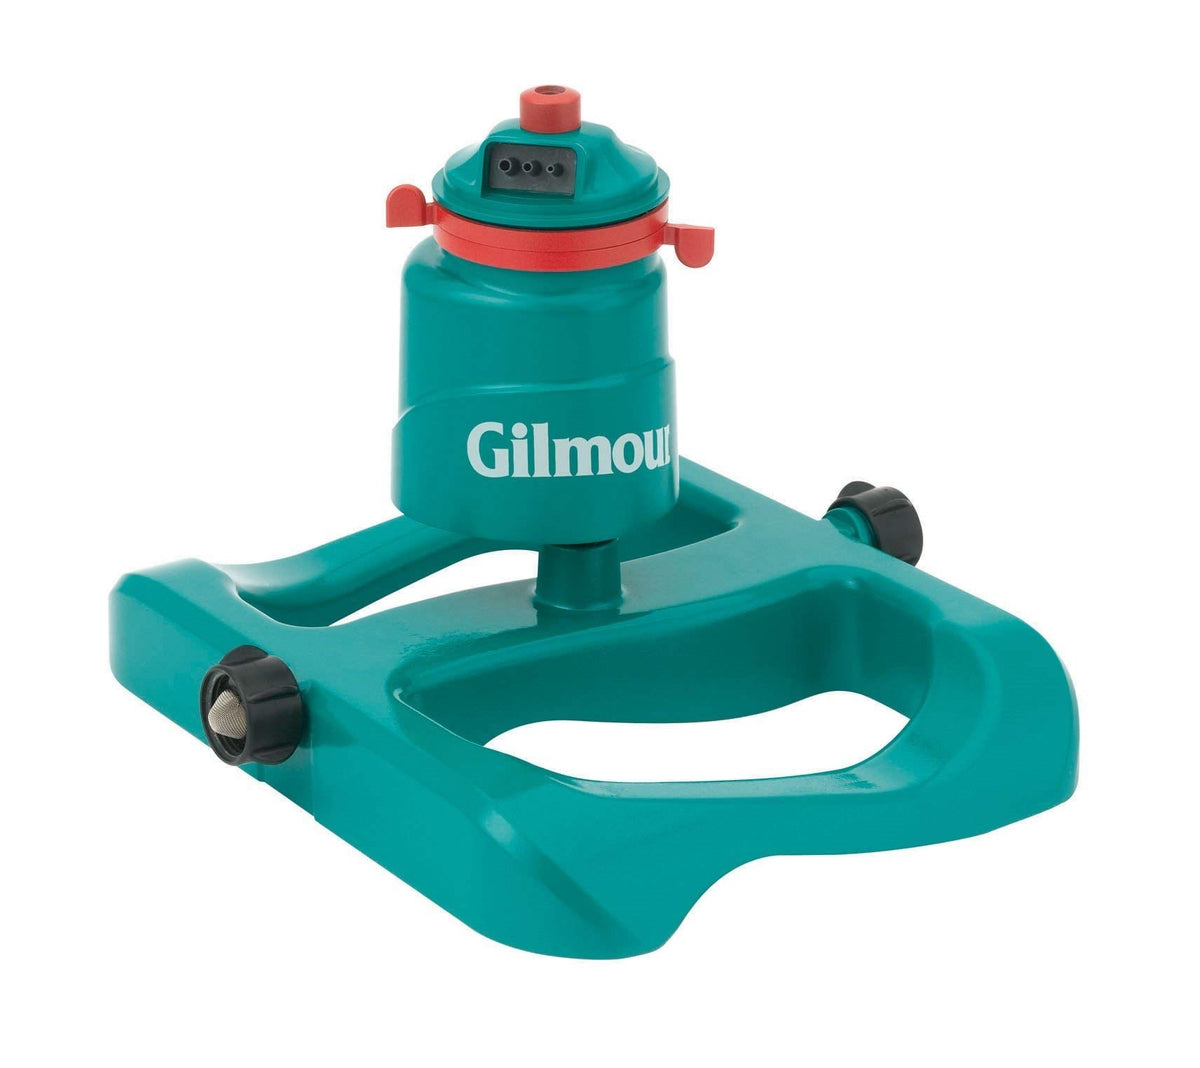 Gilmour 820133-1001 Adjustable Circular Swivel Sprinkler, Green, 3800 Sq Ft